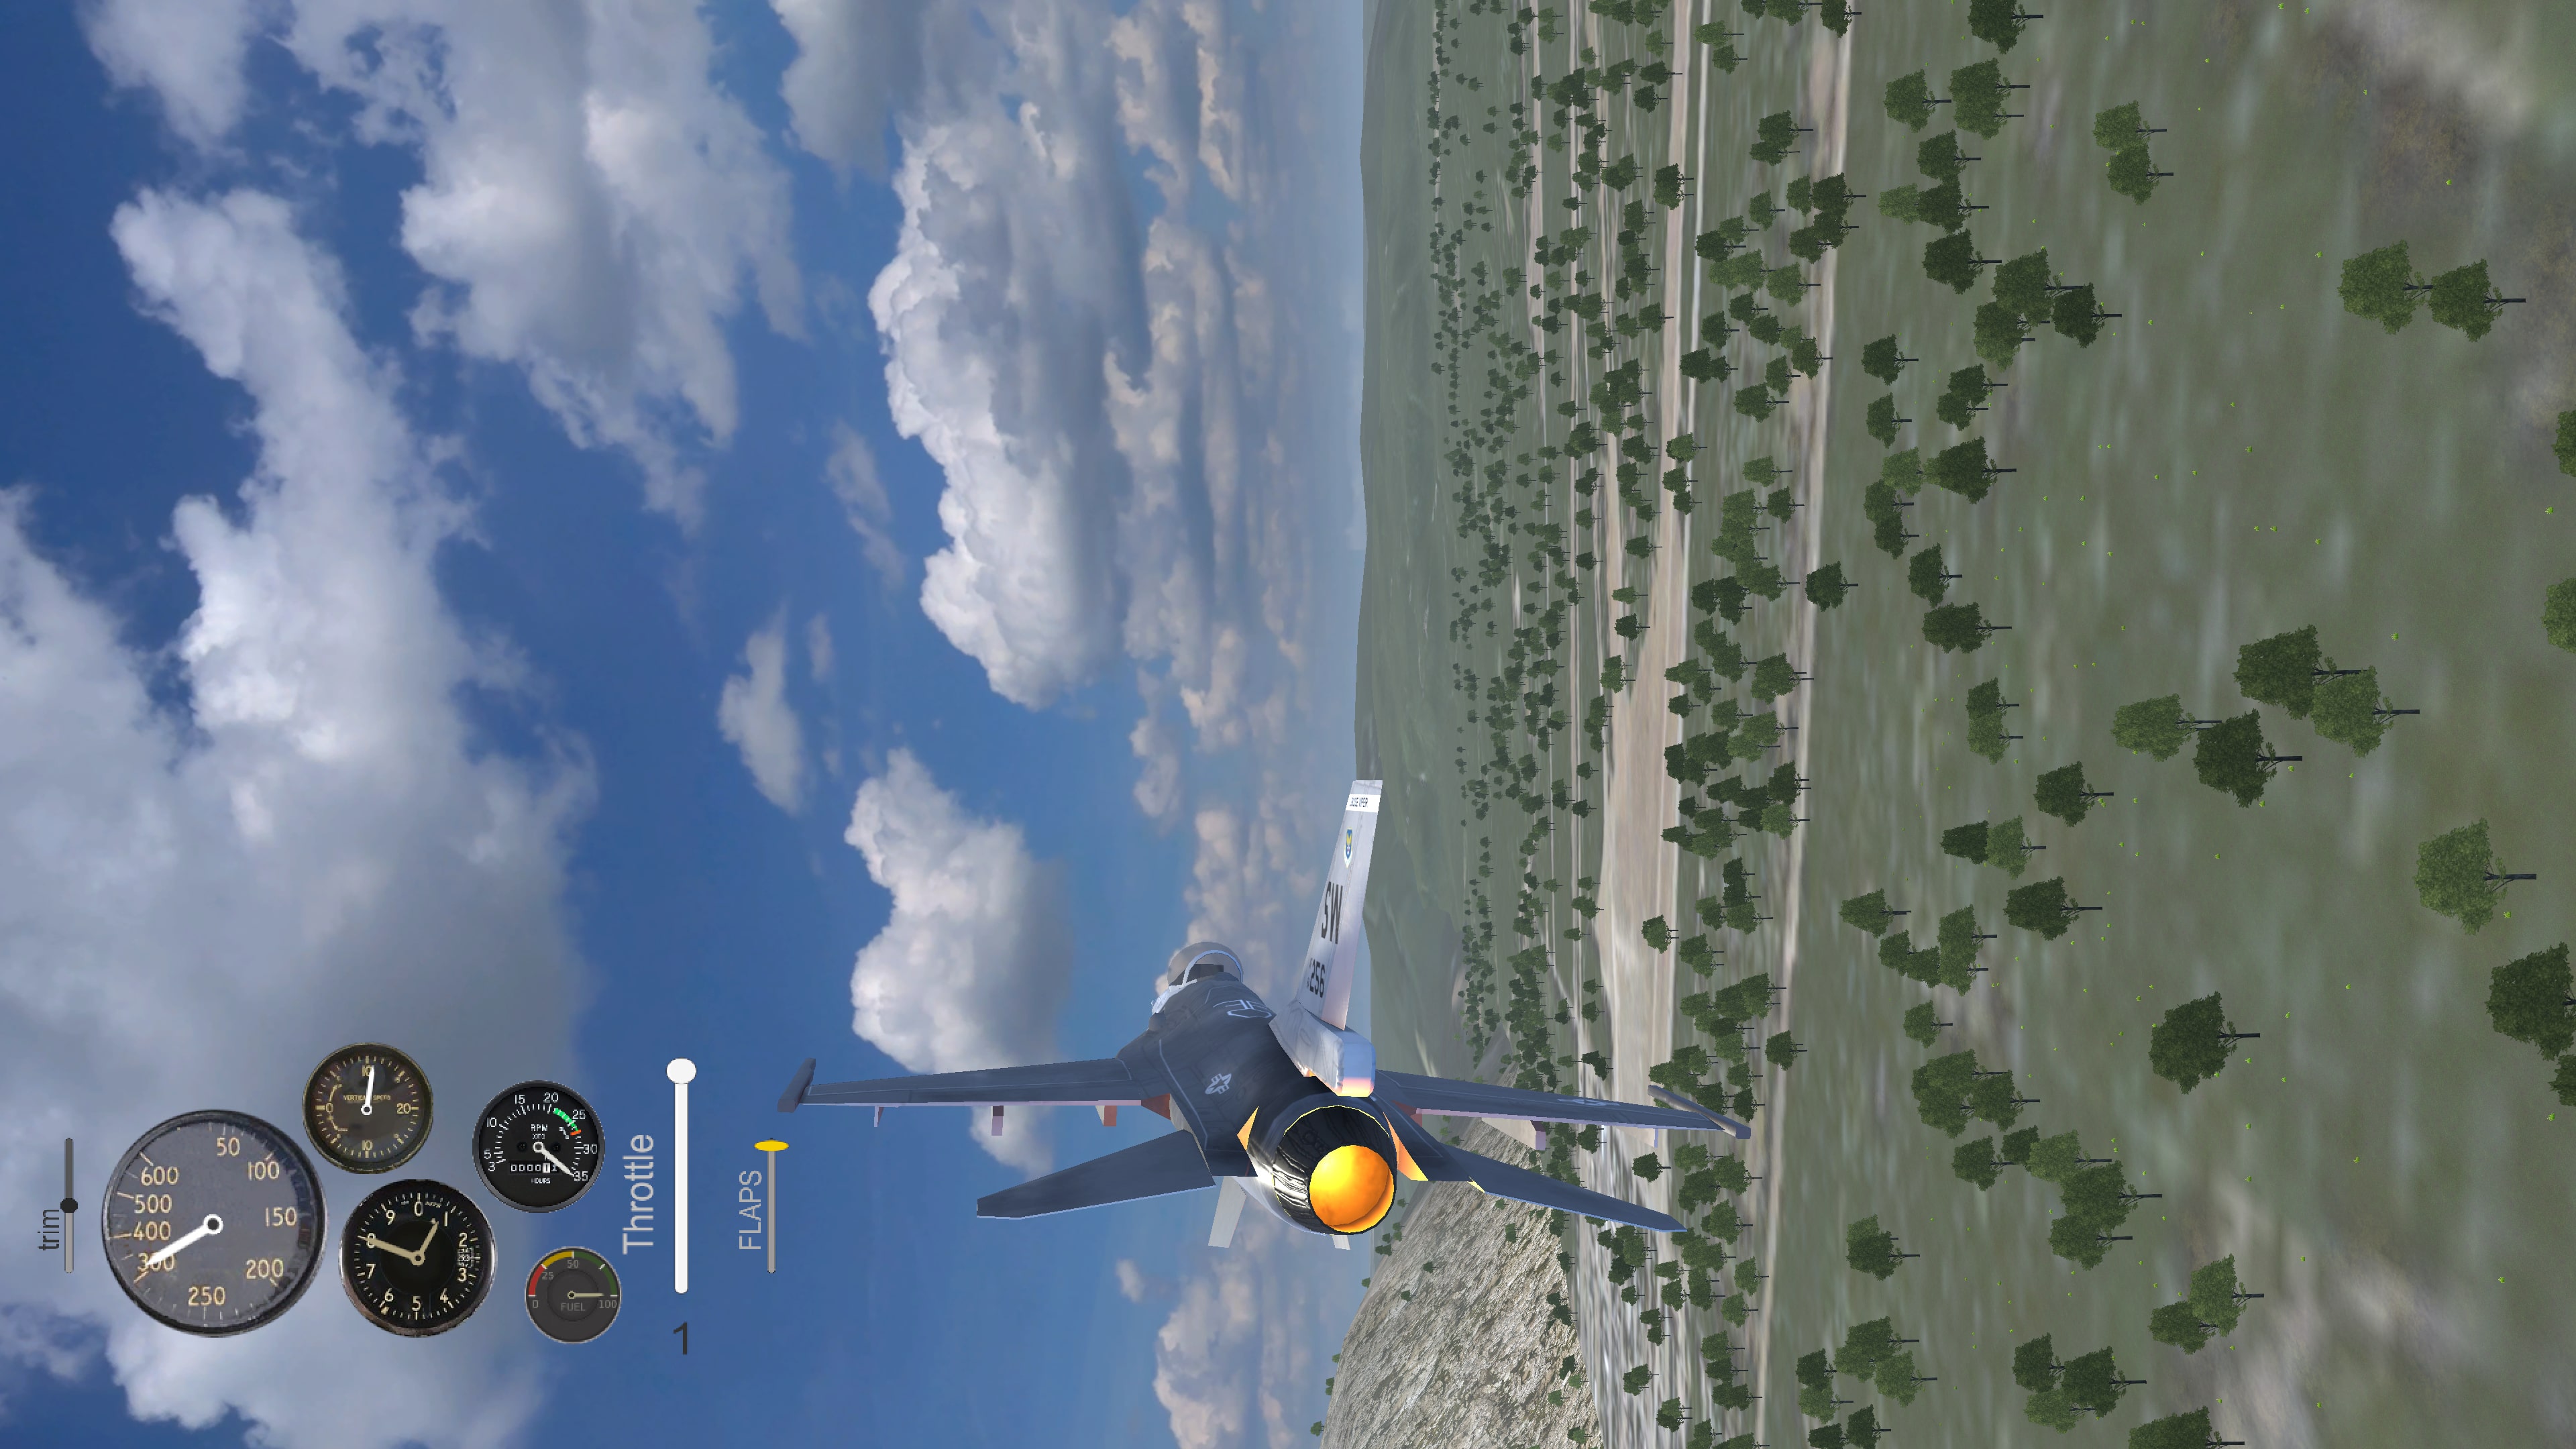 Universal Flight Simulator for PS4